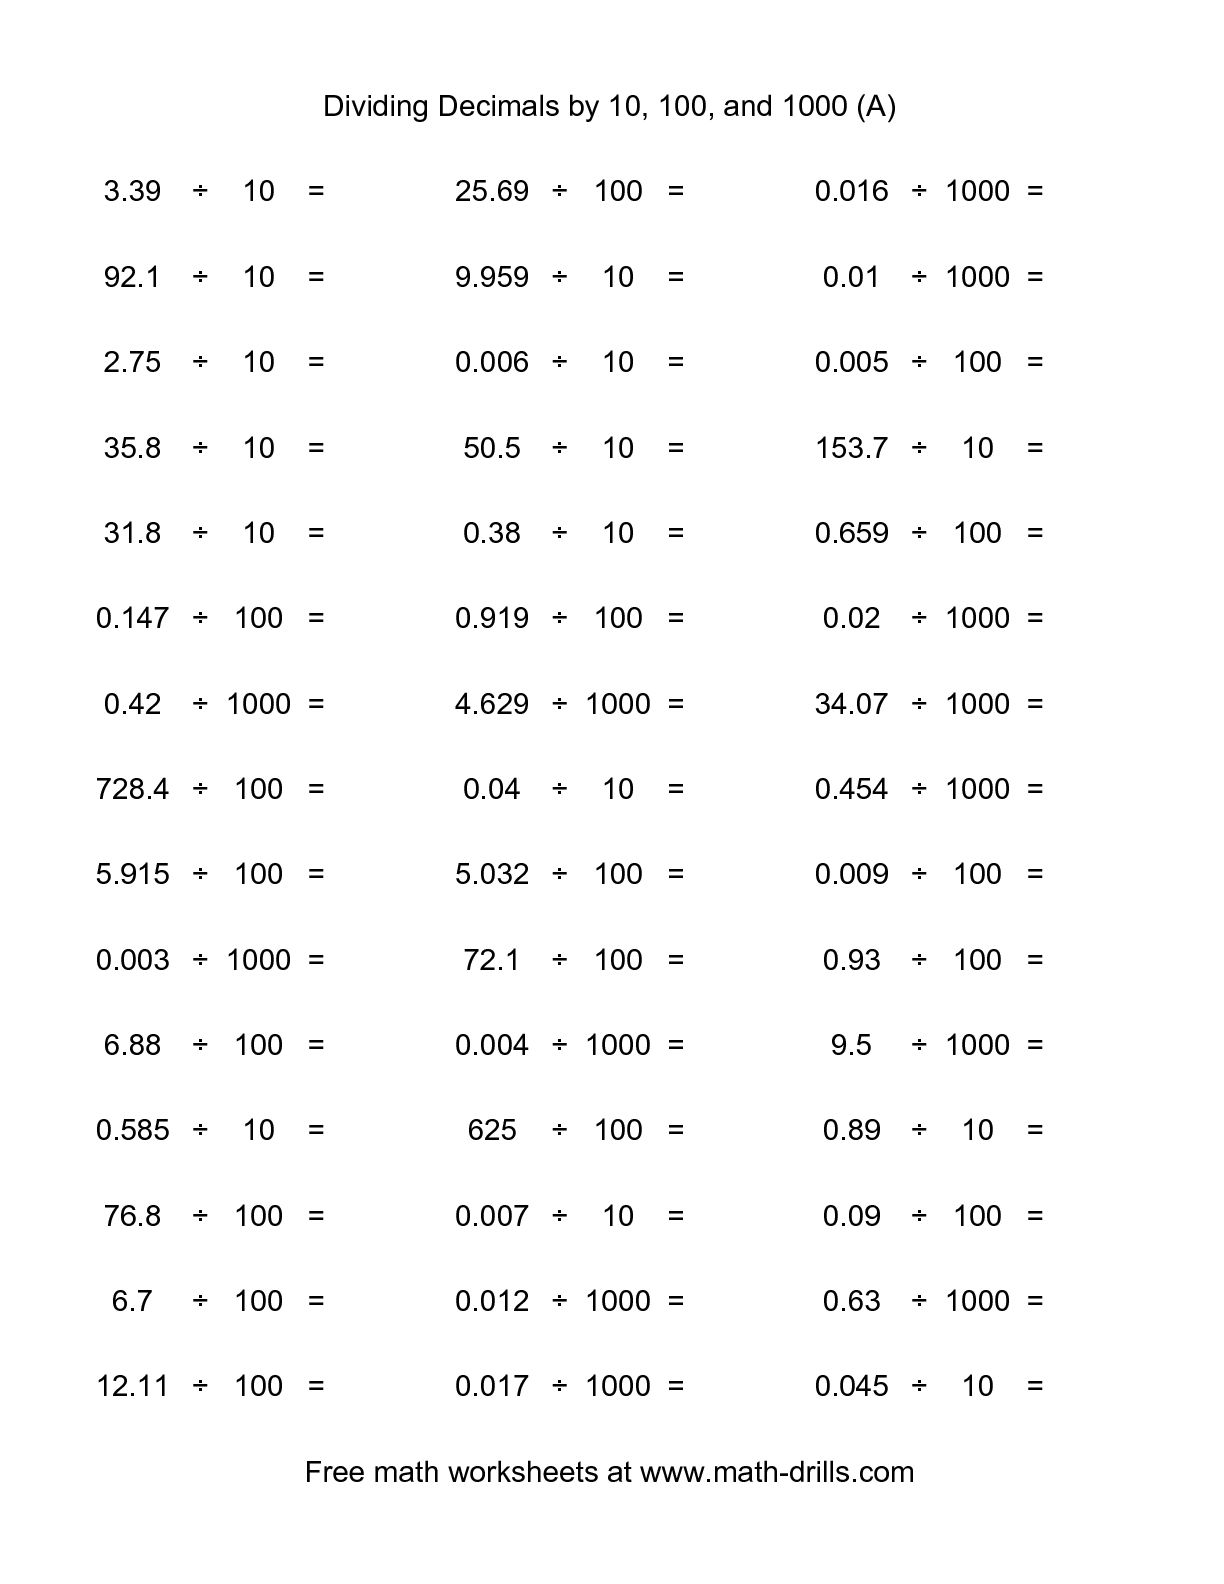 division-decimals-worksheet